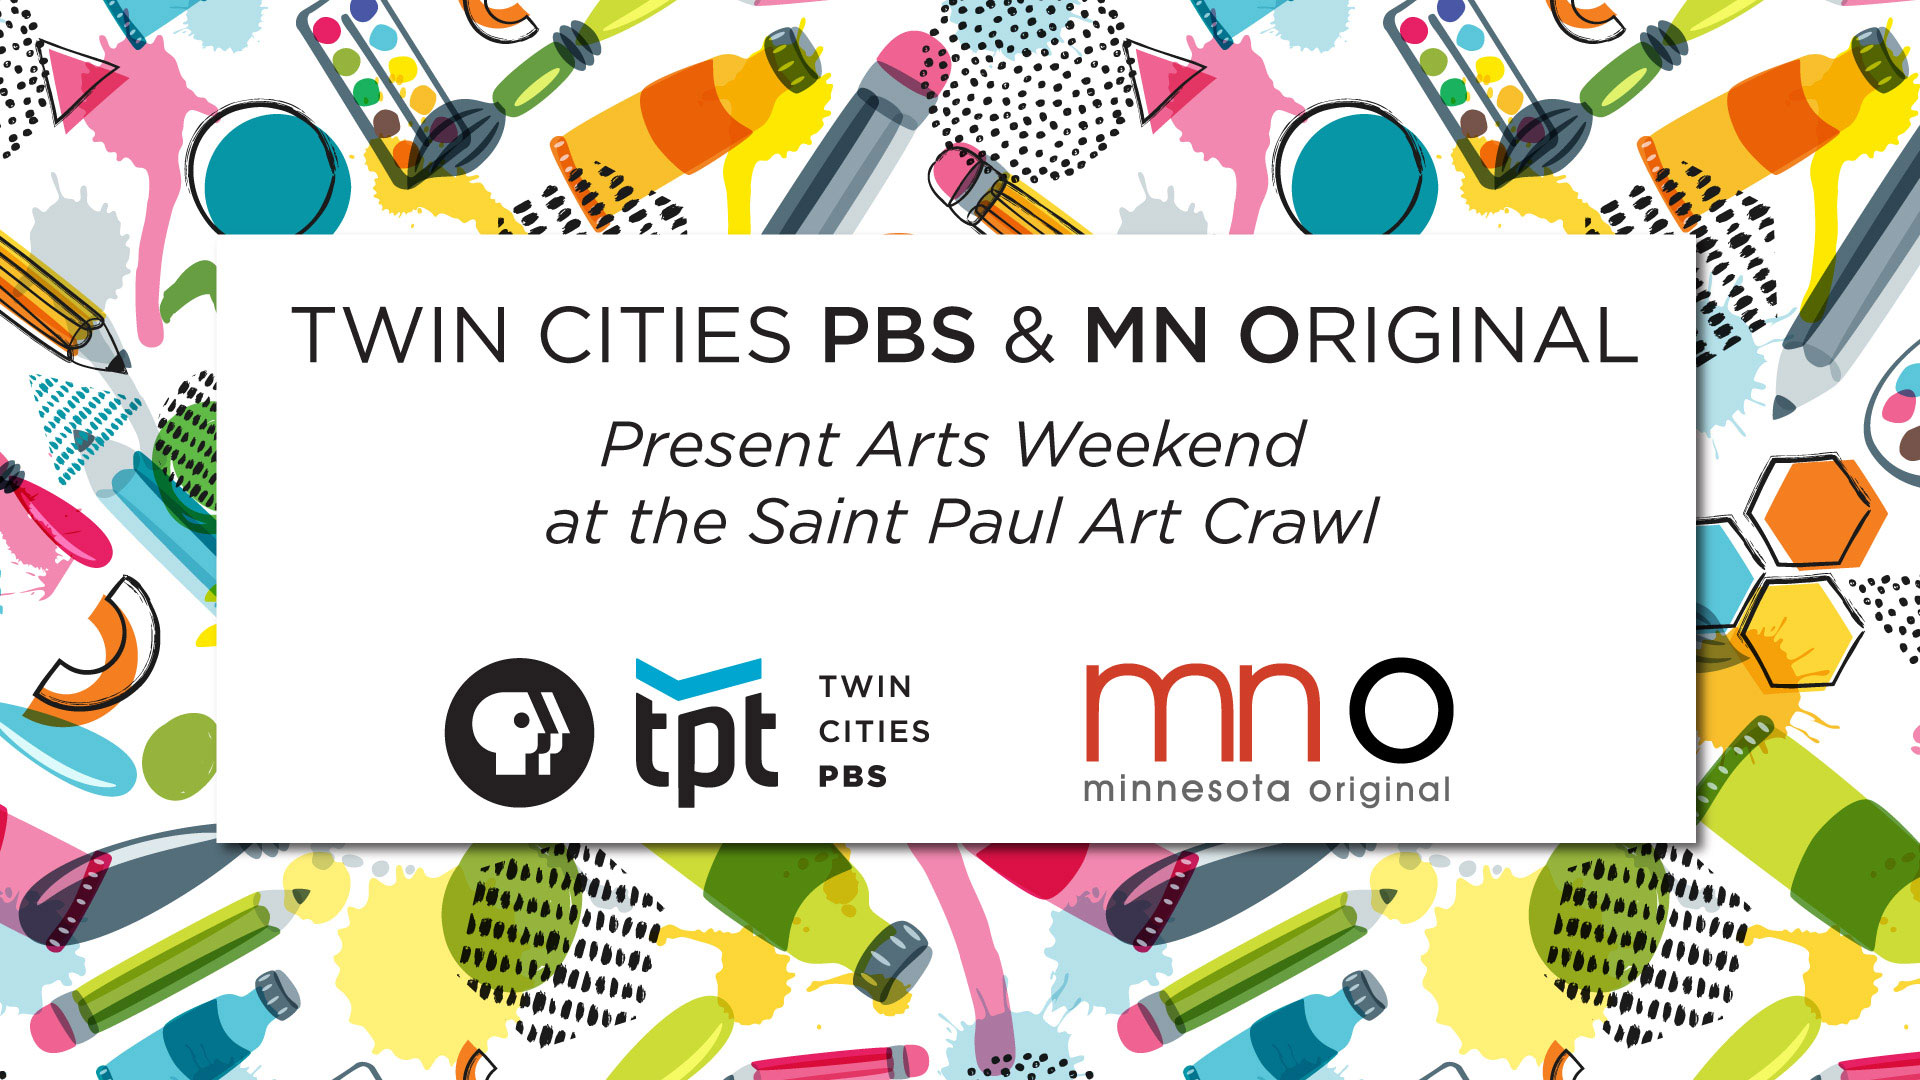 Twin Cities PBS & MN Original Present Arts Weekend at Saint Paul Art Crawl